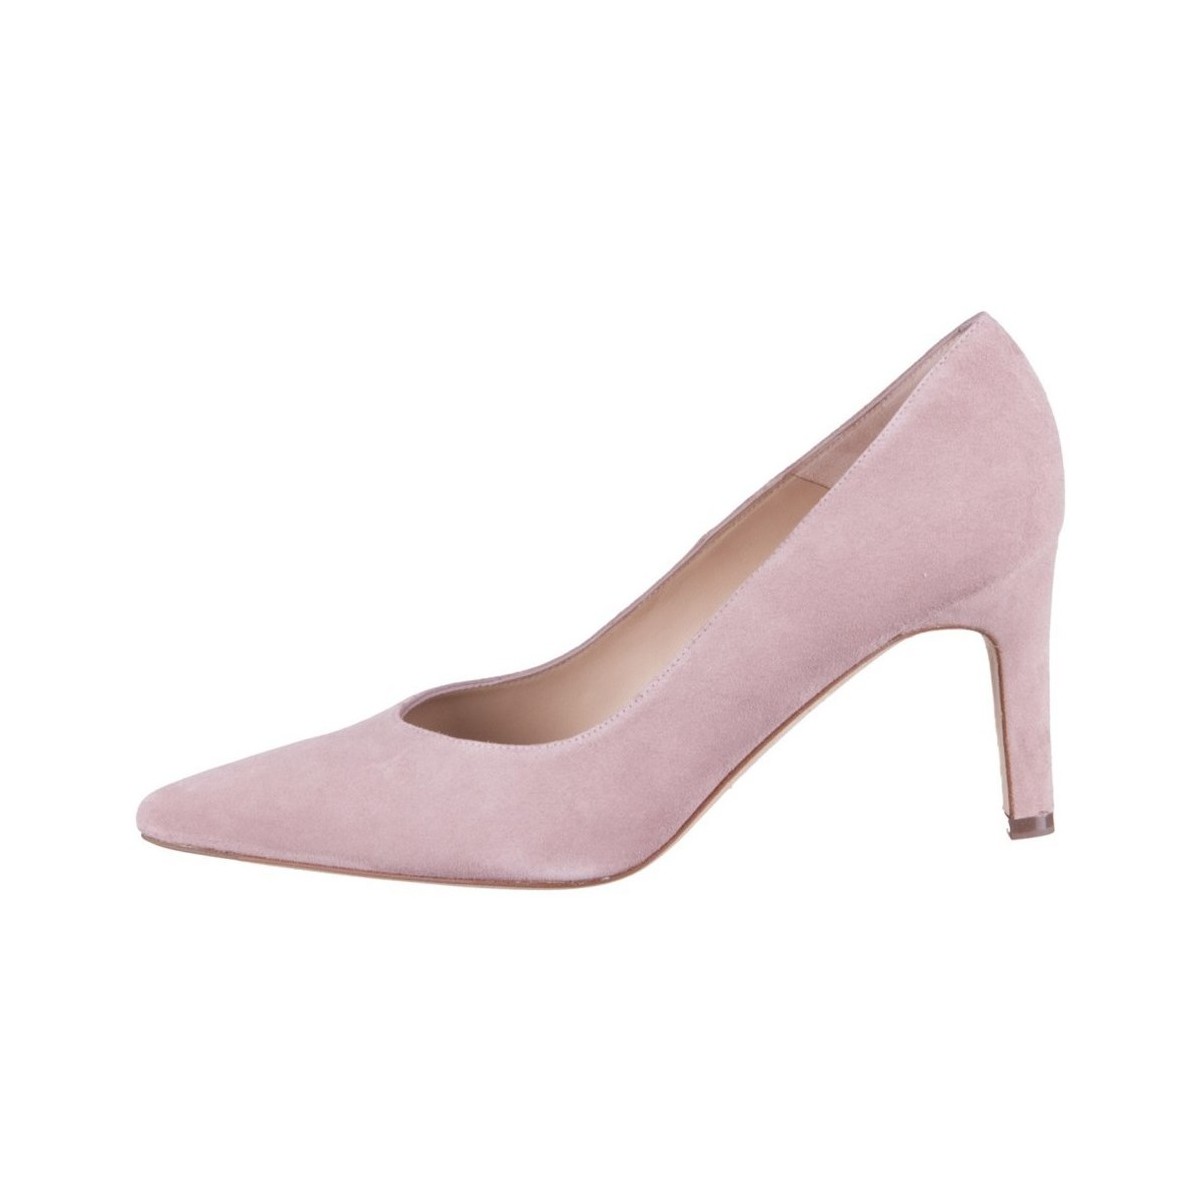 Pantofi Femei Pantofi cu toc Peter Kaiser Telse PE roz